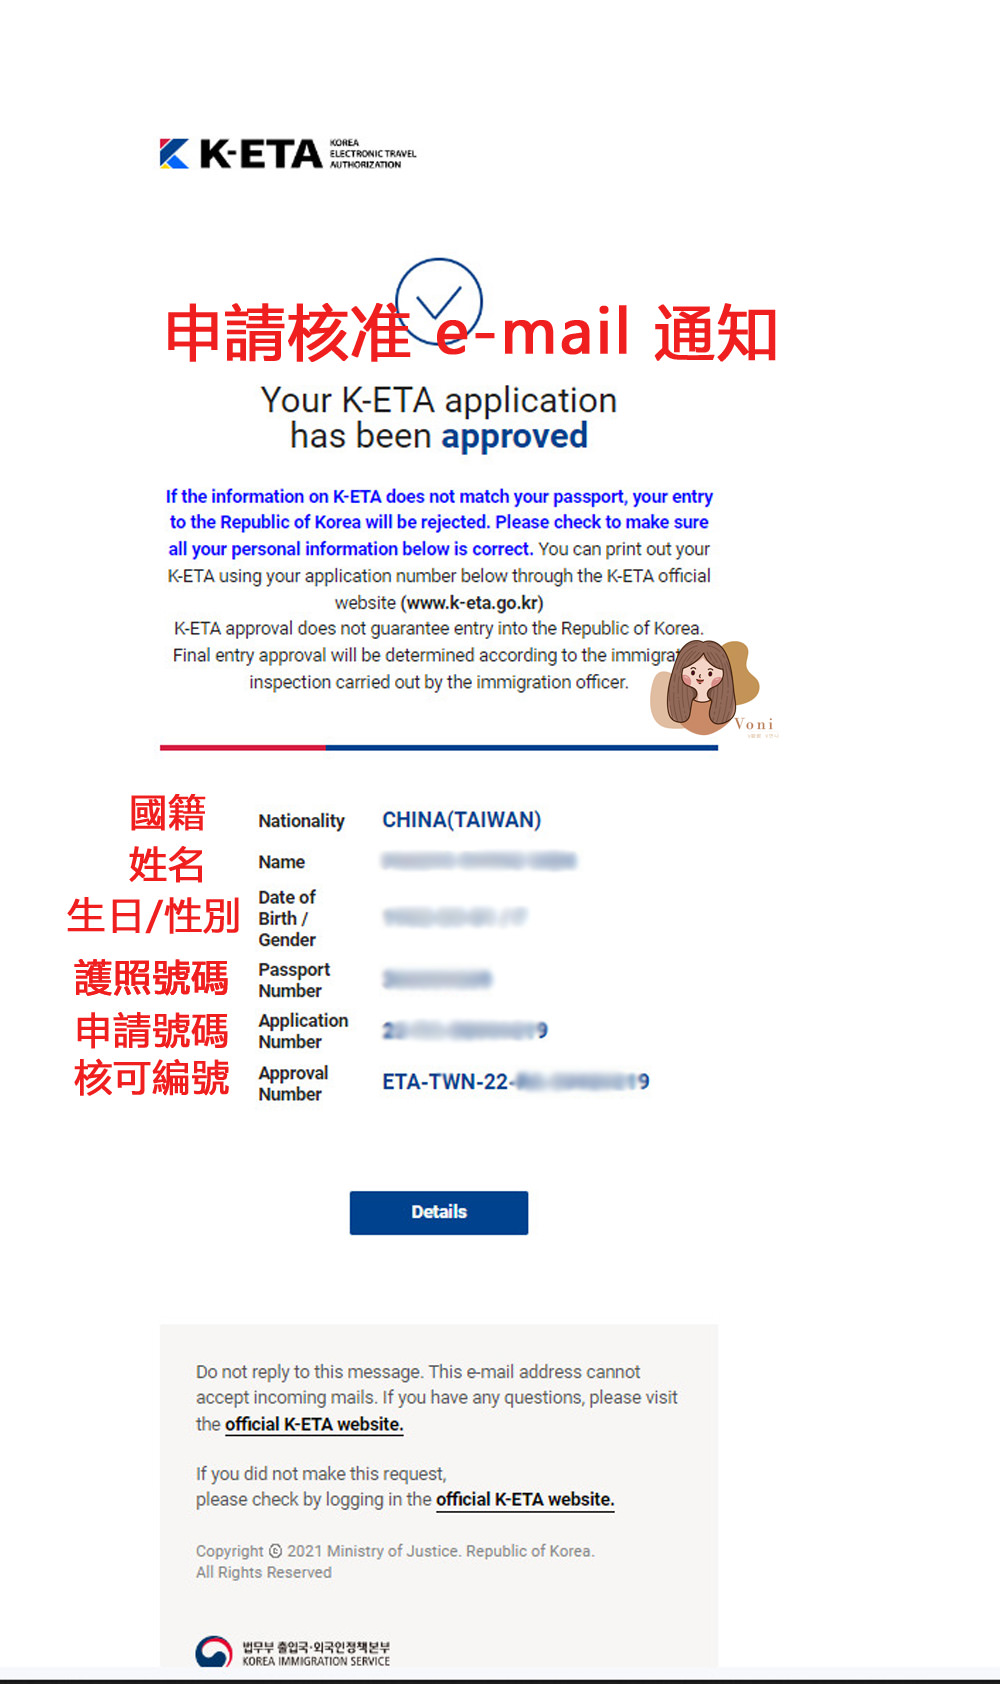 K-ETA 韓國電子旅行許可申請教學